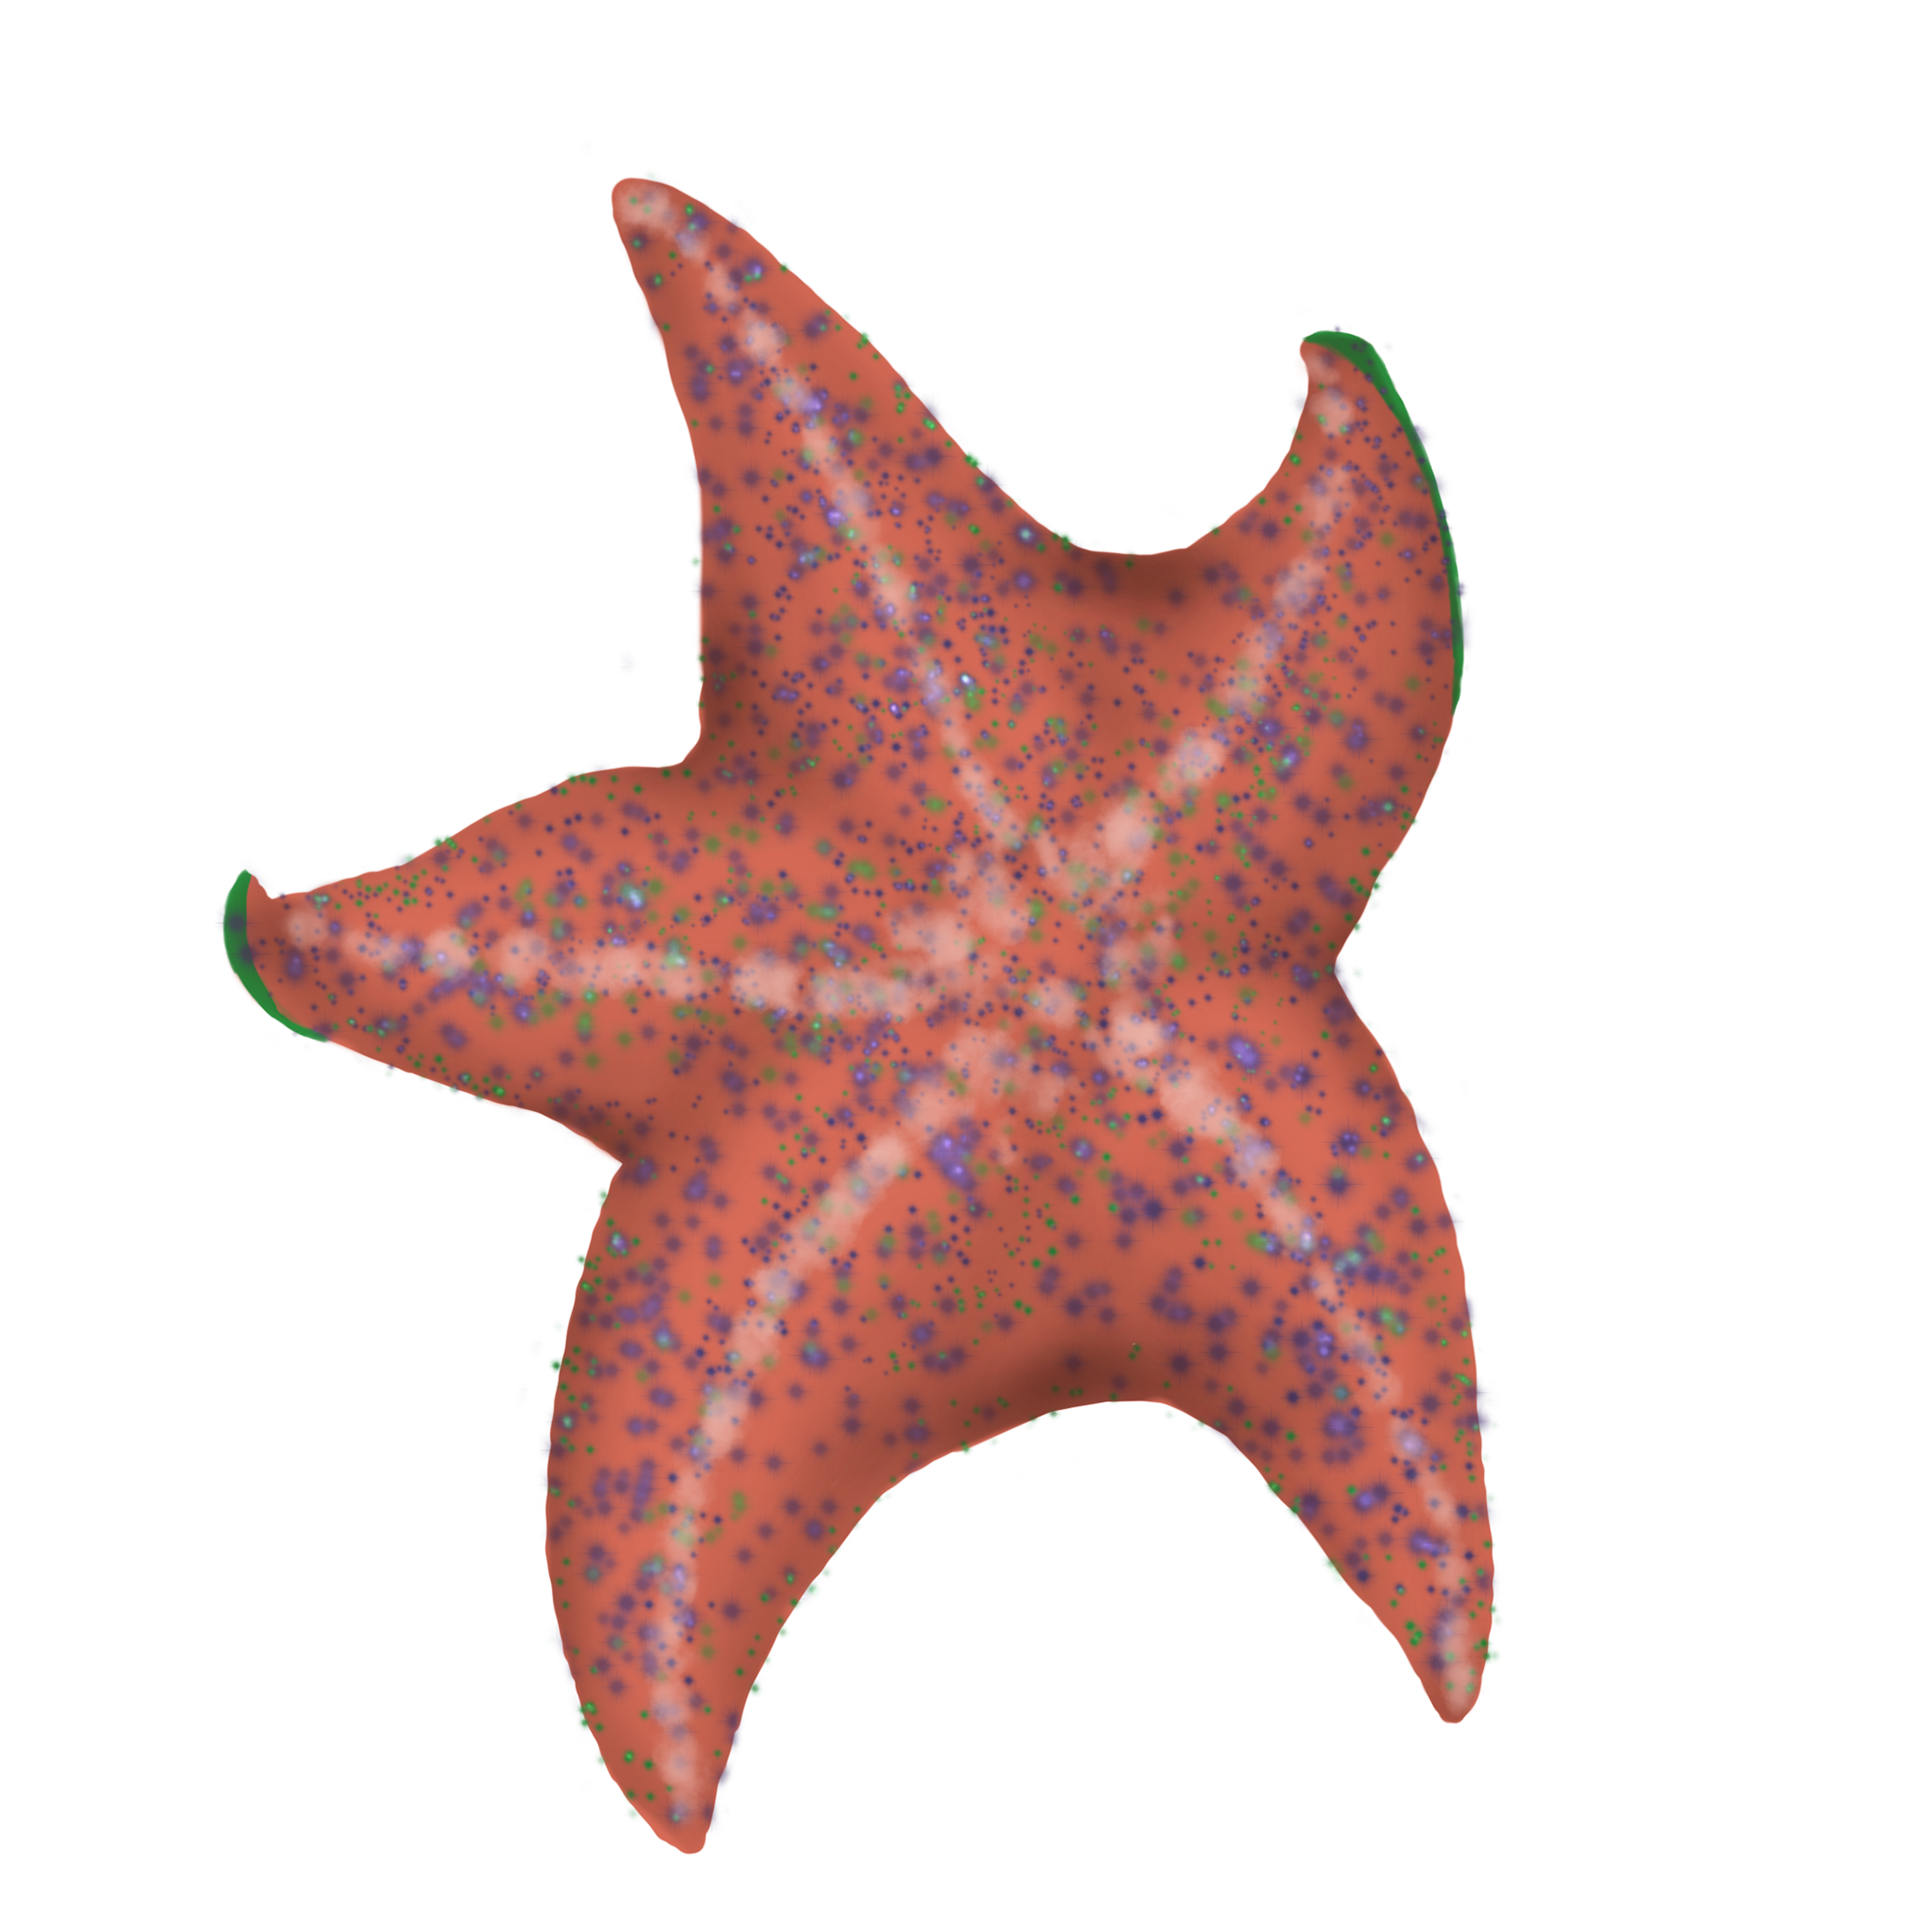 pentaradial symmetry starfish clipart